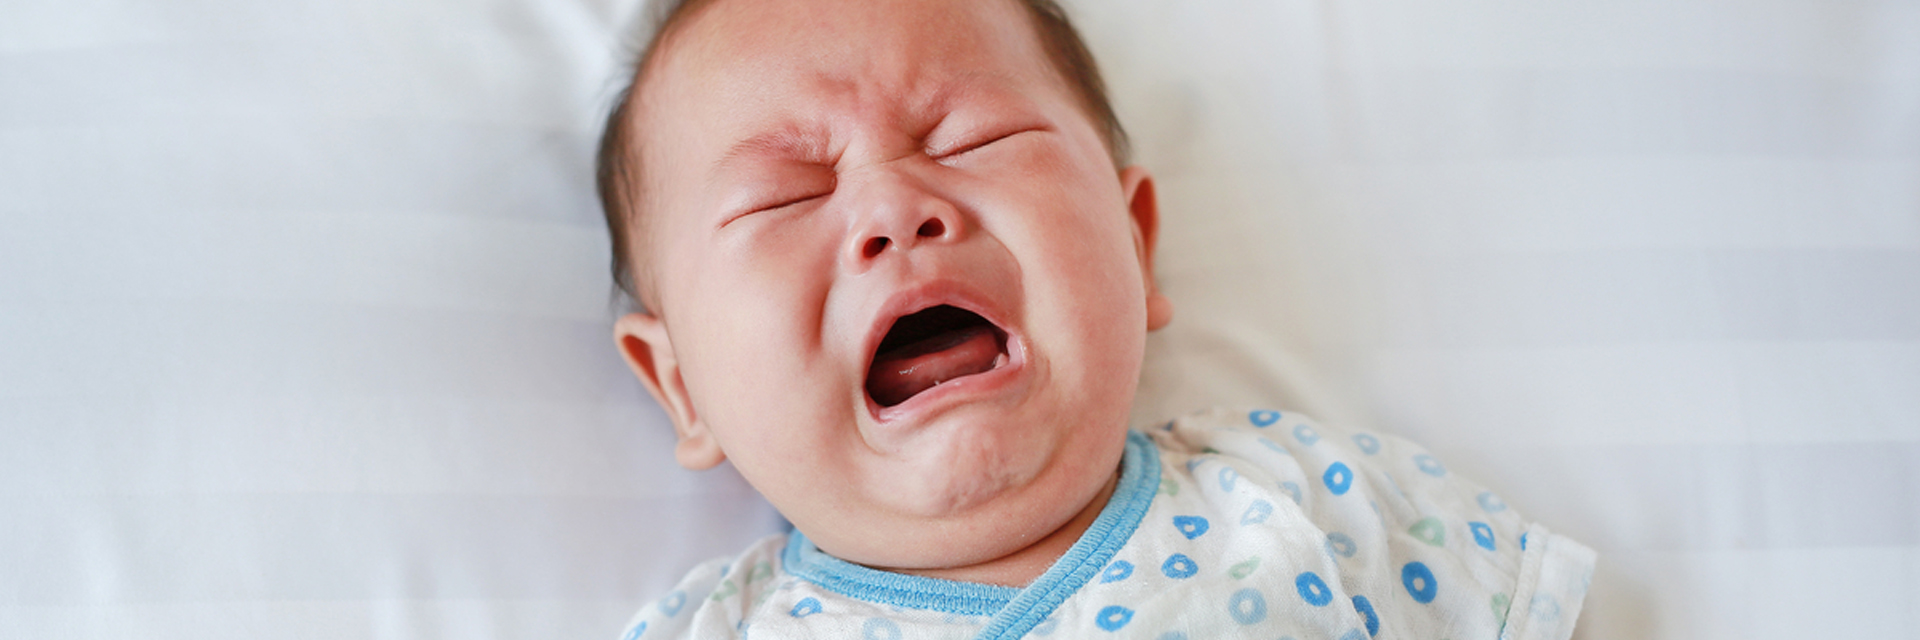 Infant crying